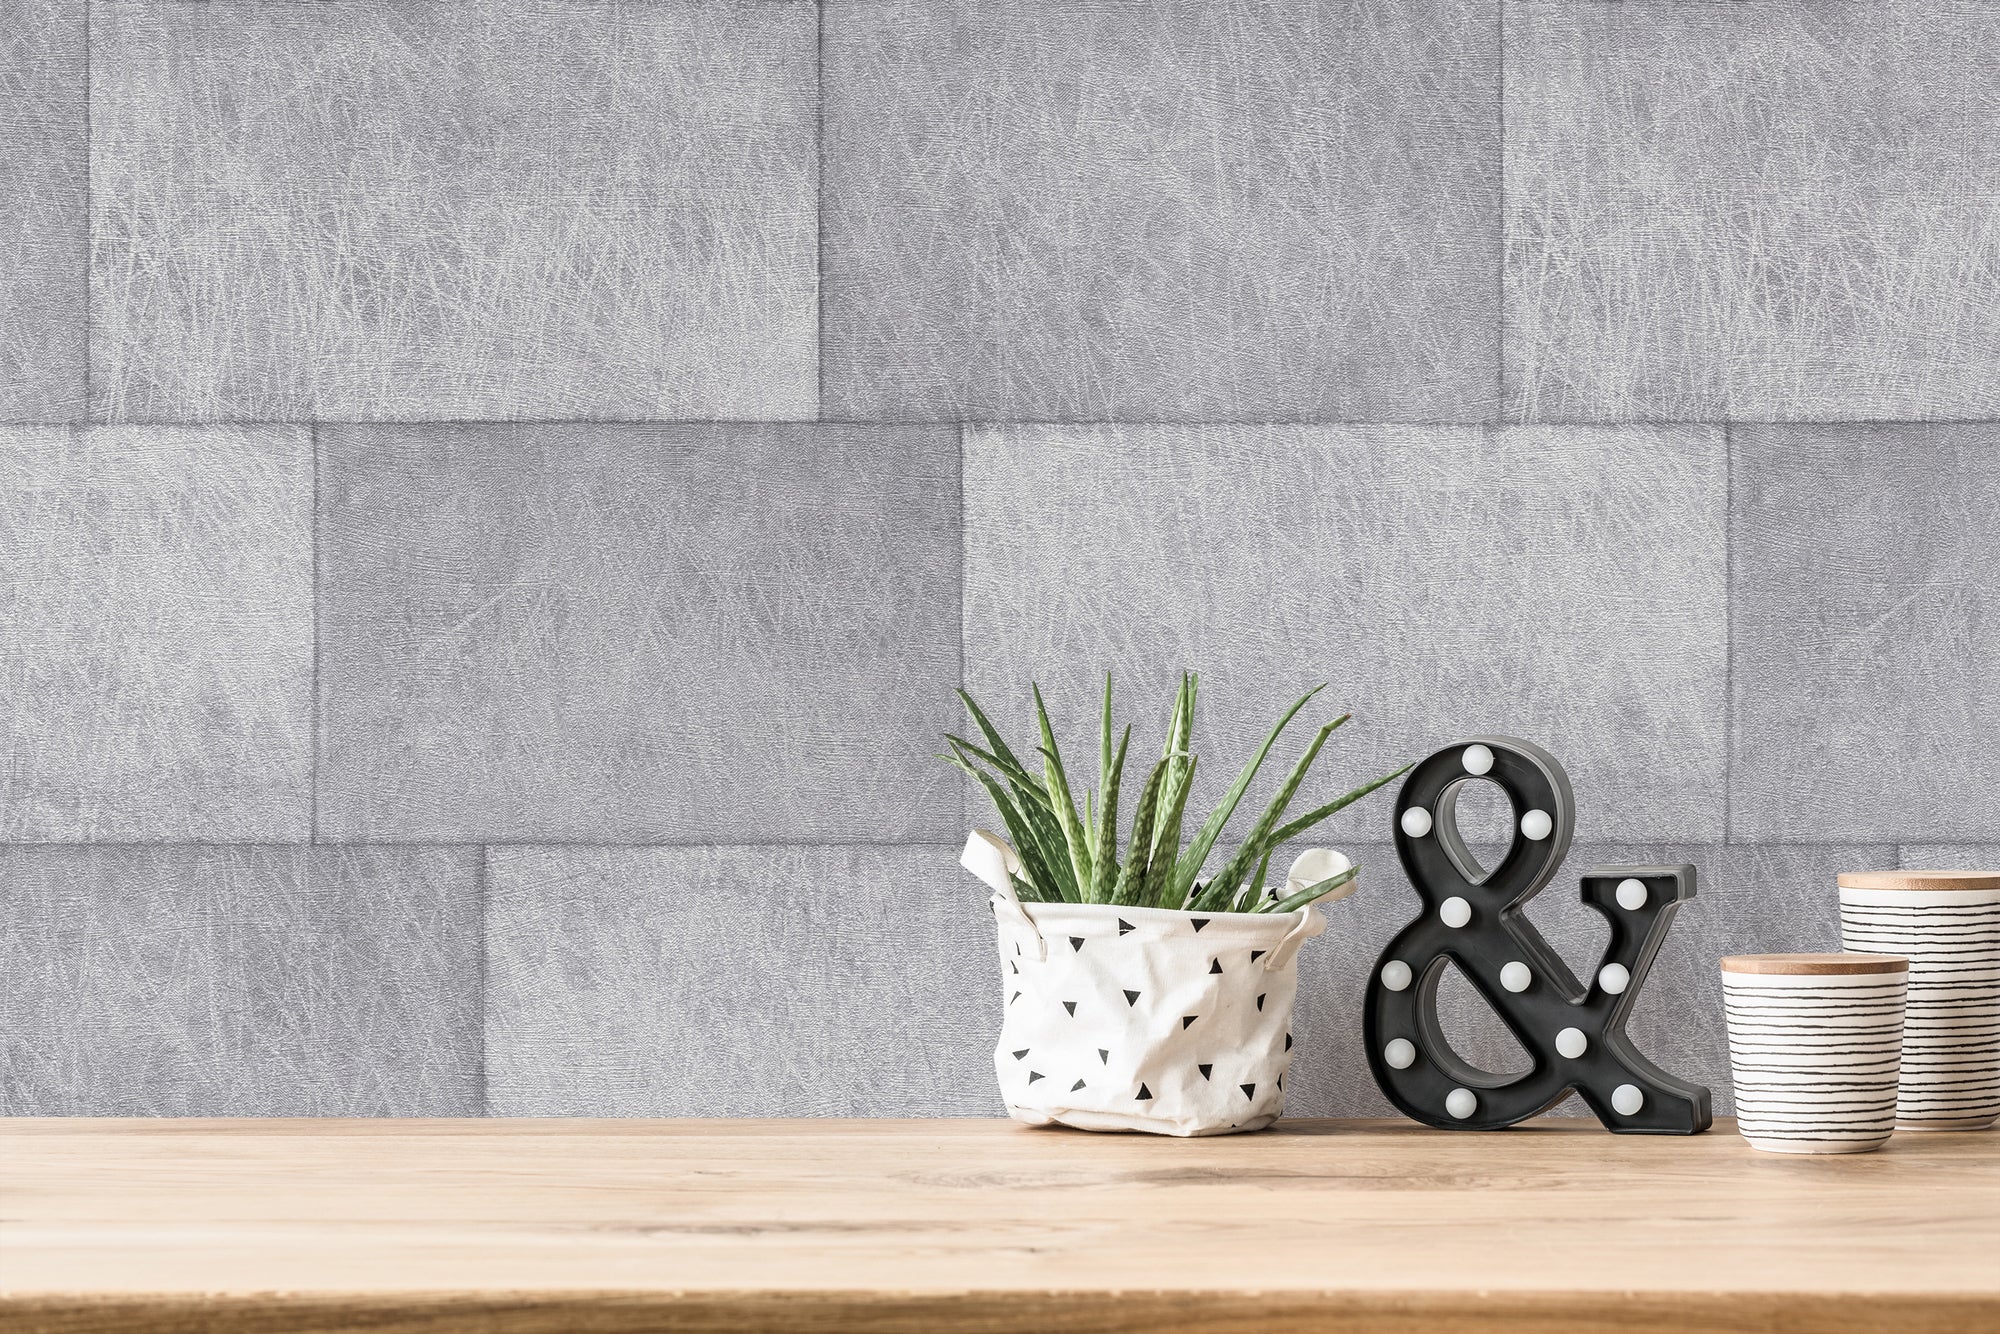 Titanium 3 - Tiles industrial wallpaper AS Creation    